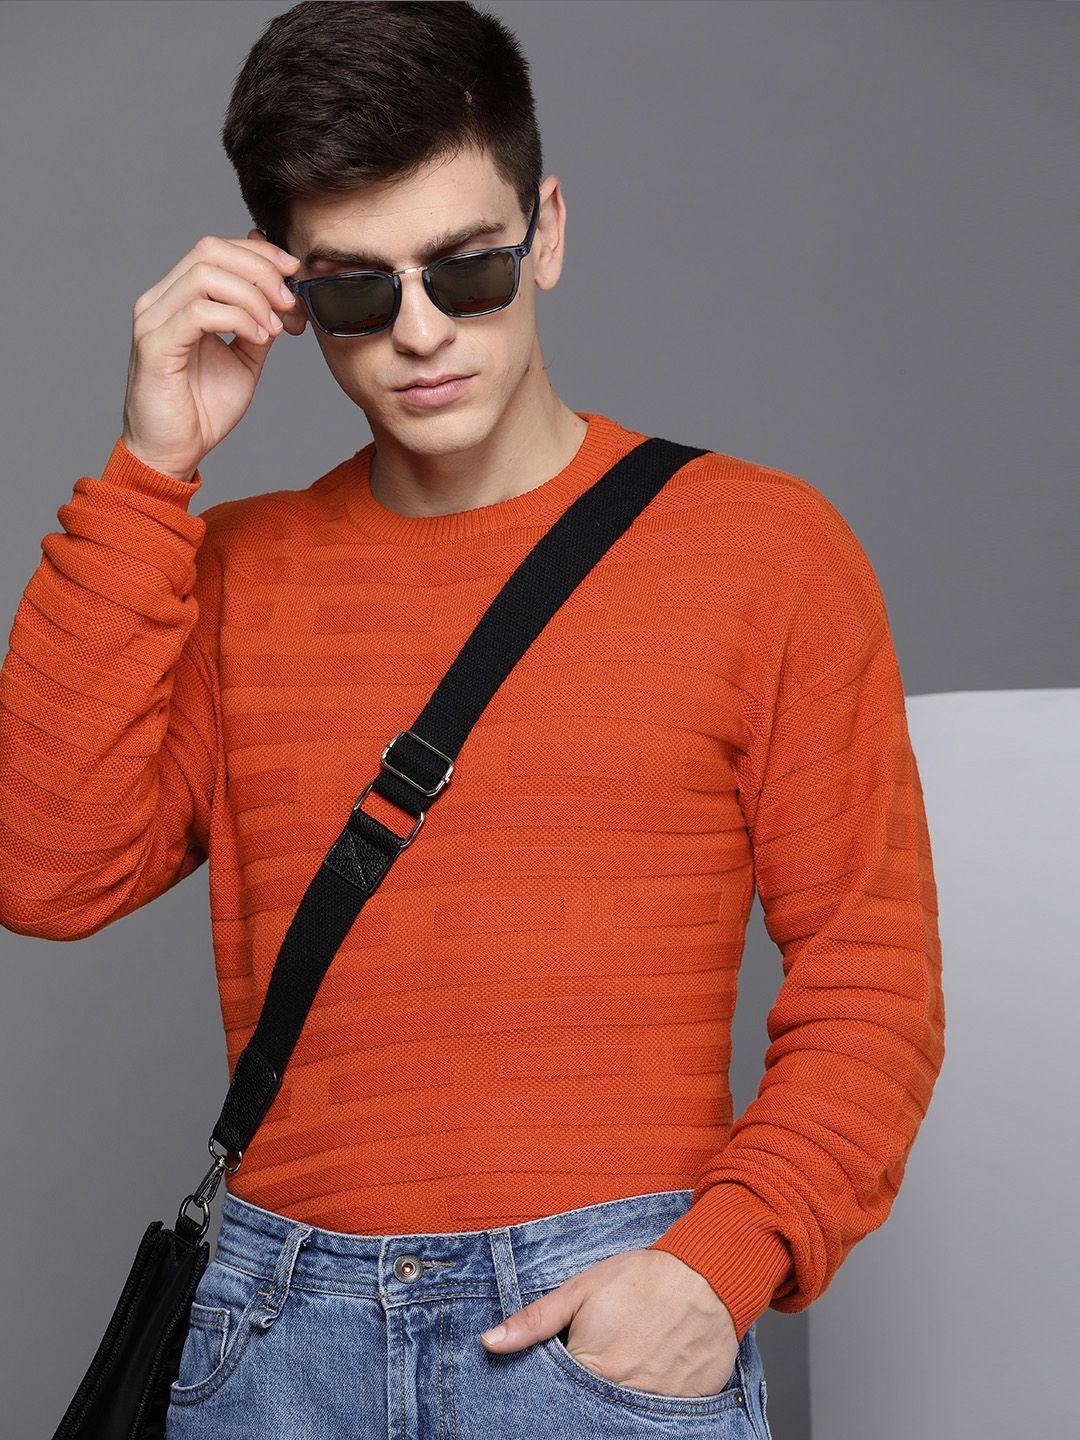 kenneth-cole-men-orange-self-design-pure-cotton-open-knit-pullover-sweater